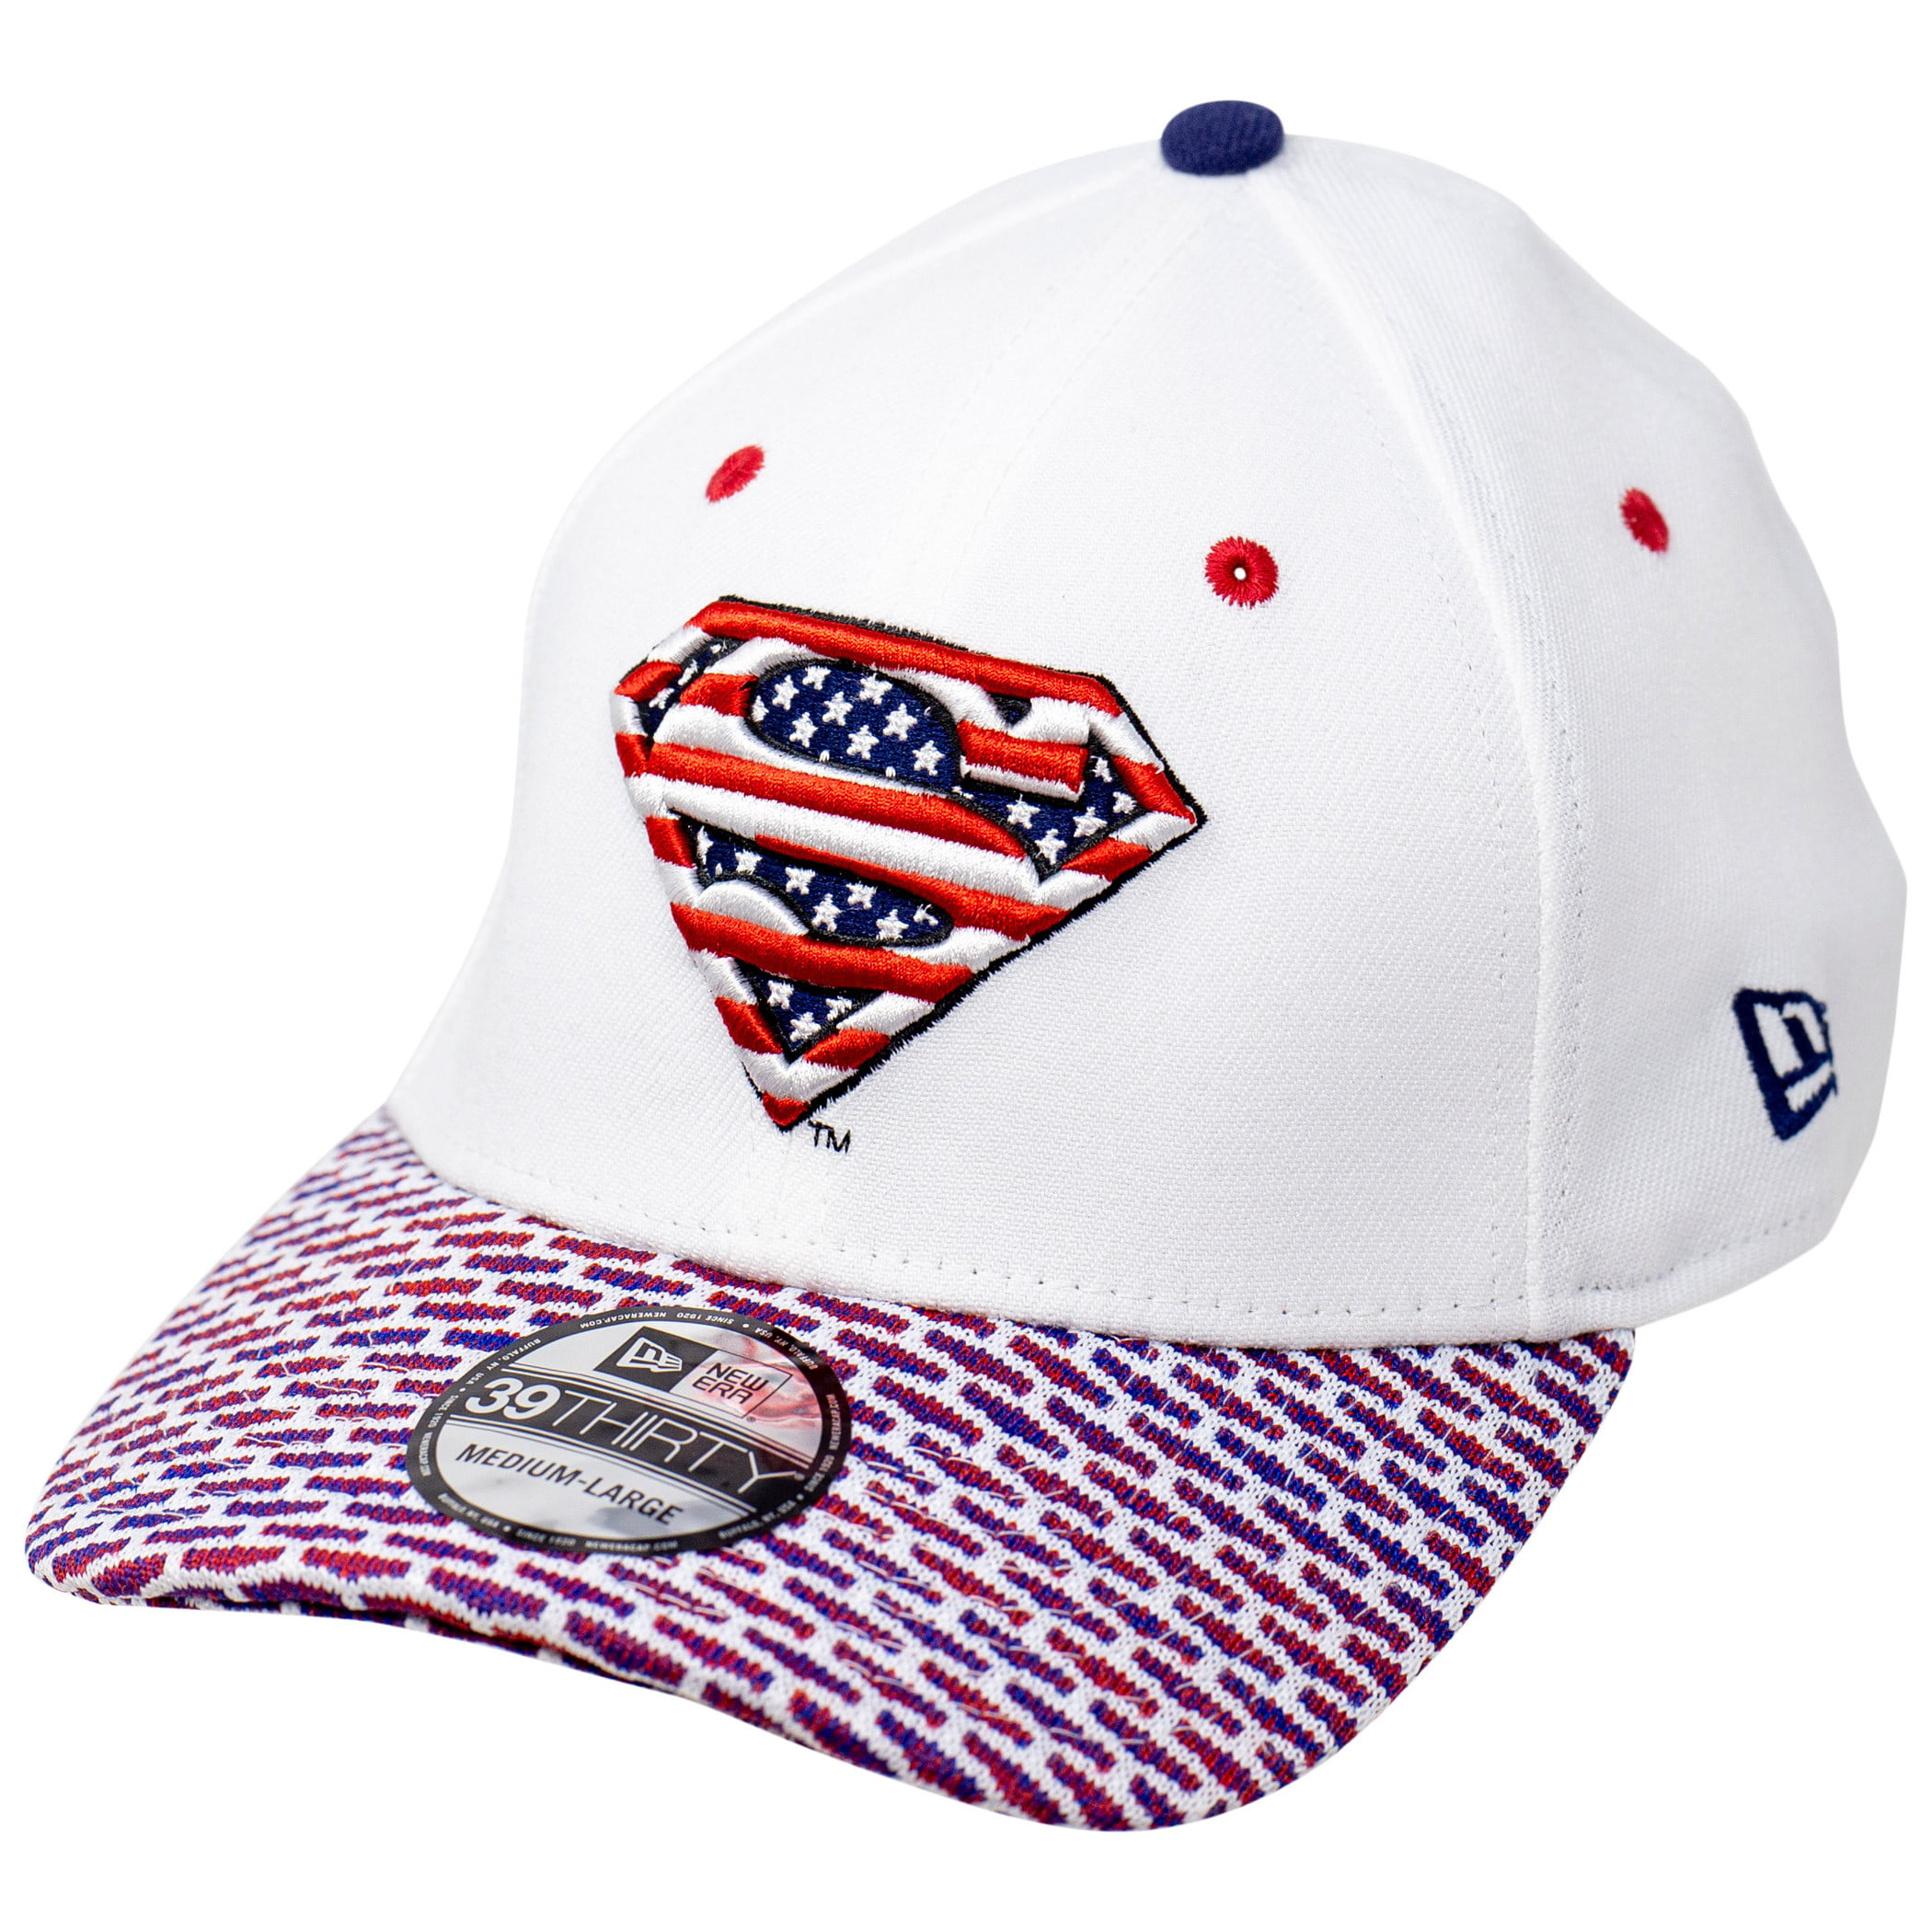 size medium//large New Era Pink Stretch-fit Baseball Cap